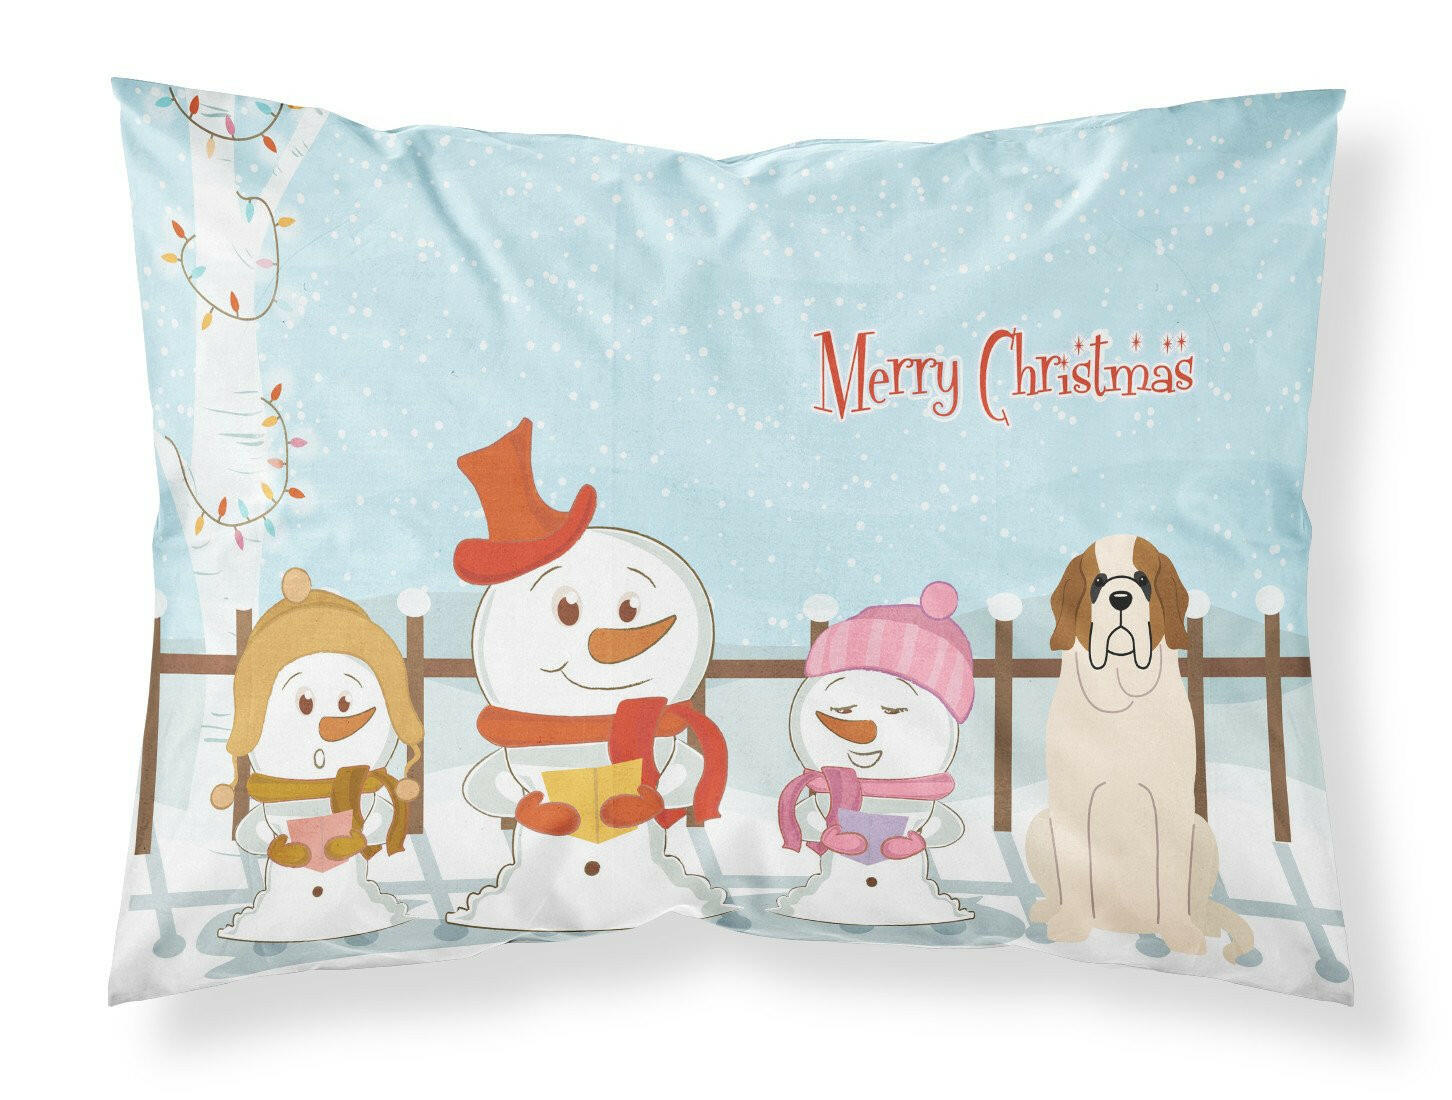 Merry Christmas Carolers Saint Bernard Fabric Standard Pillowcase BB2366PILLOWCASE by Caroline's Treasures